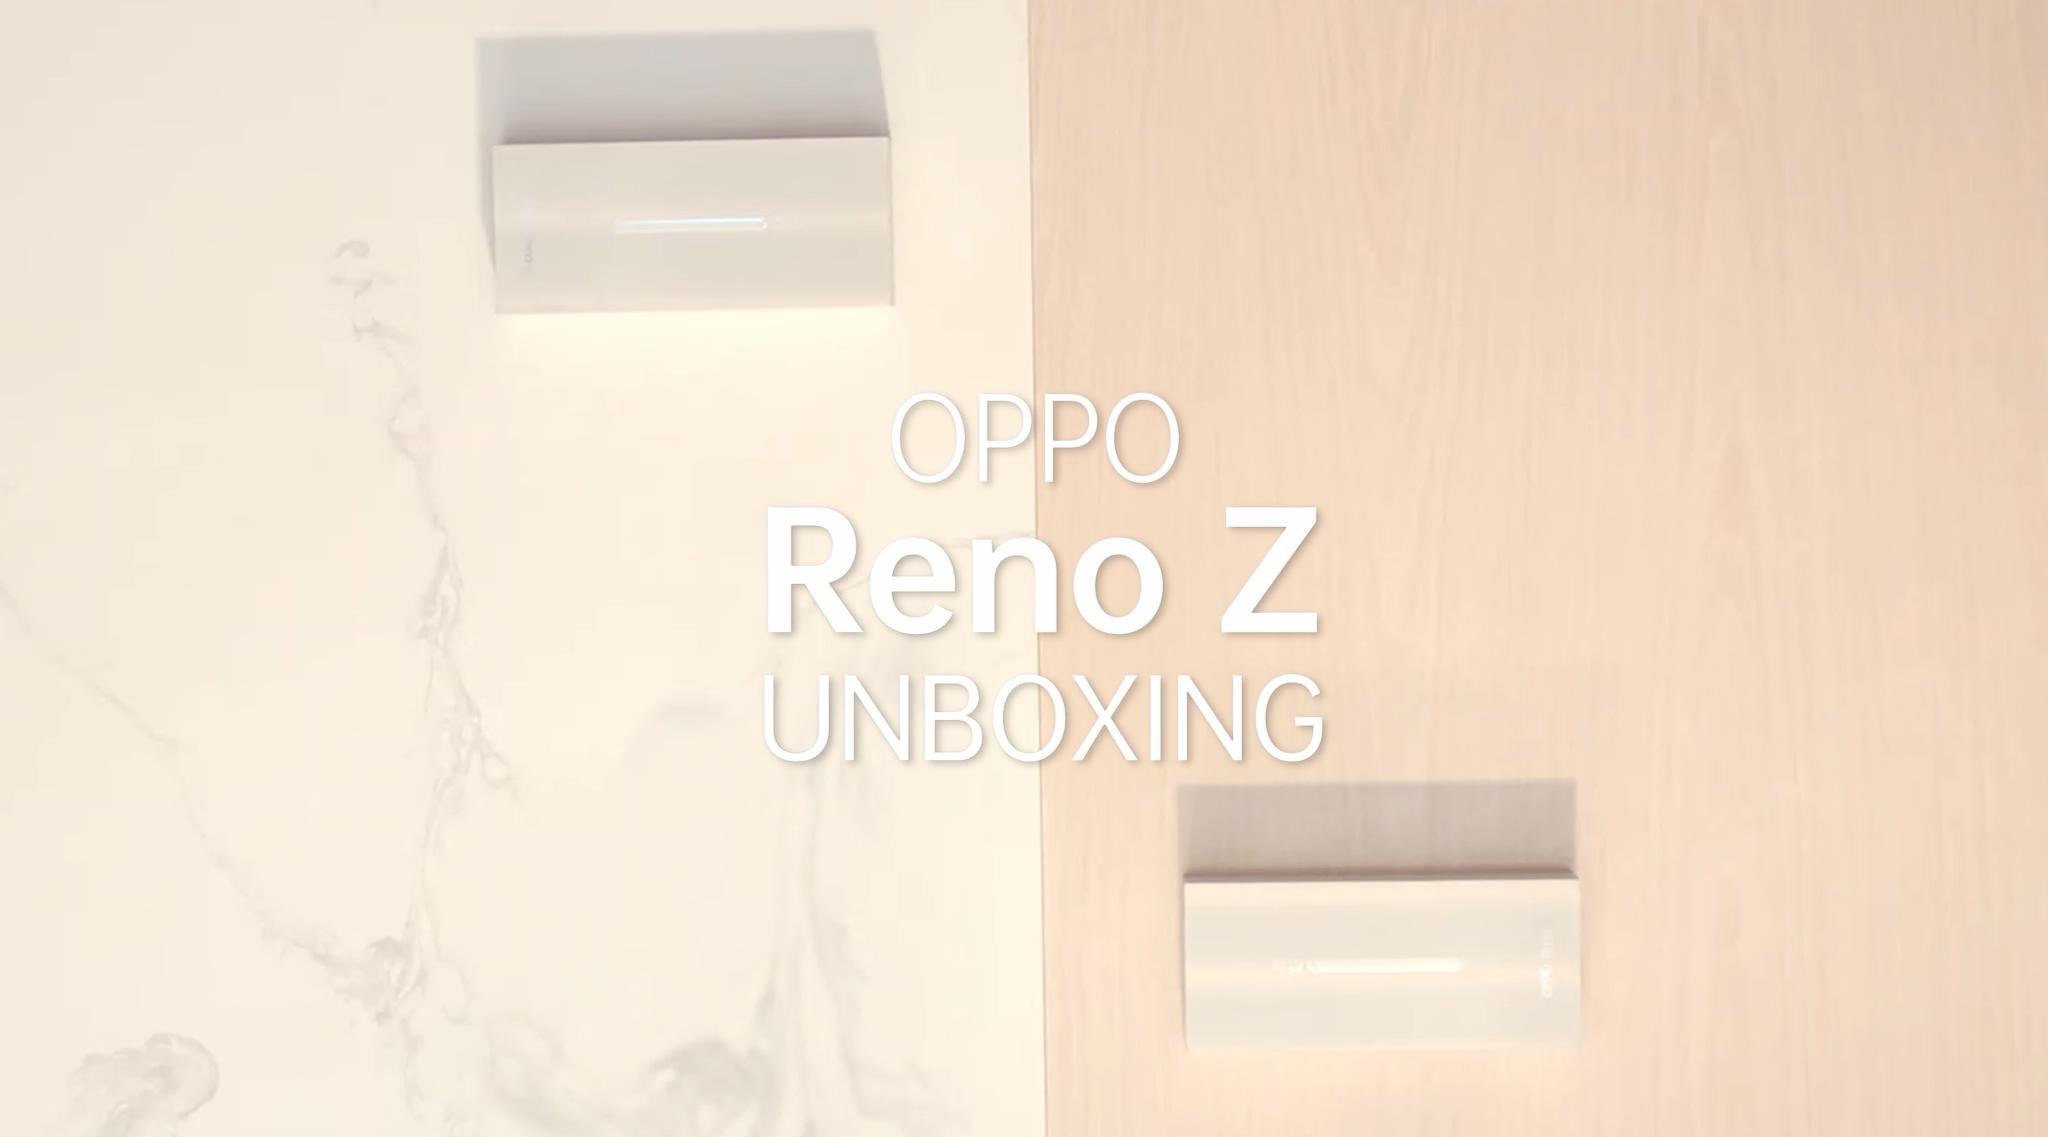 OPPO Reno Z unboxing 开箱视频 